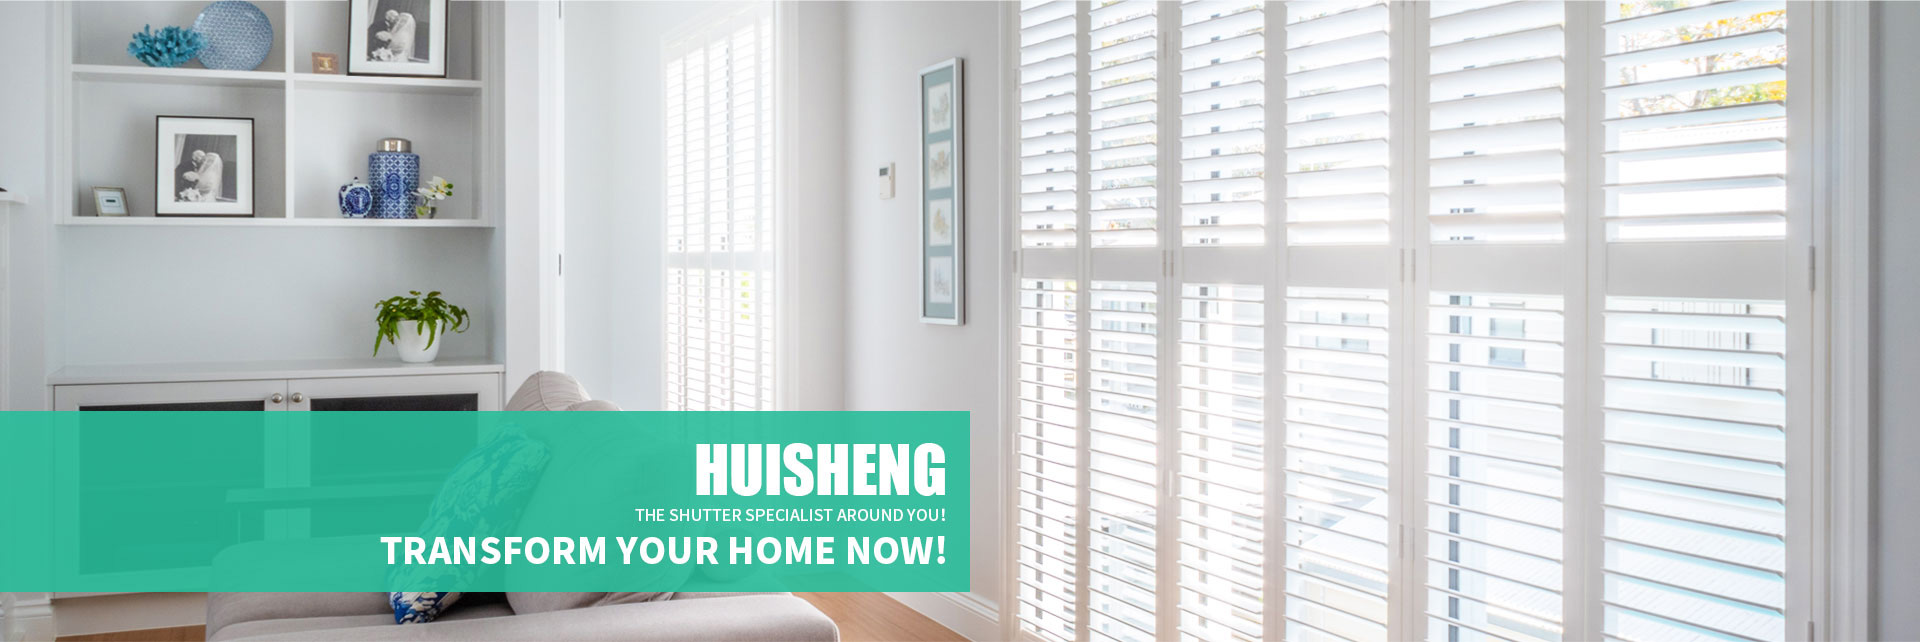 Huisheng,the shutter specialist around you!